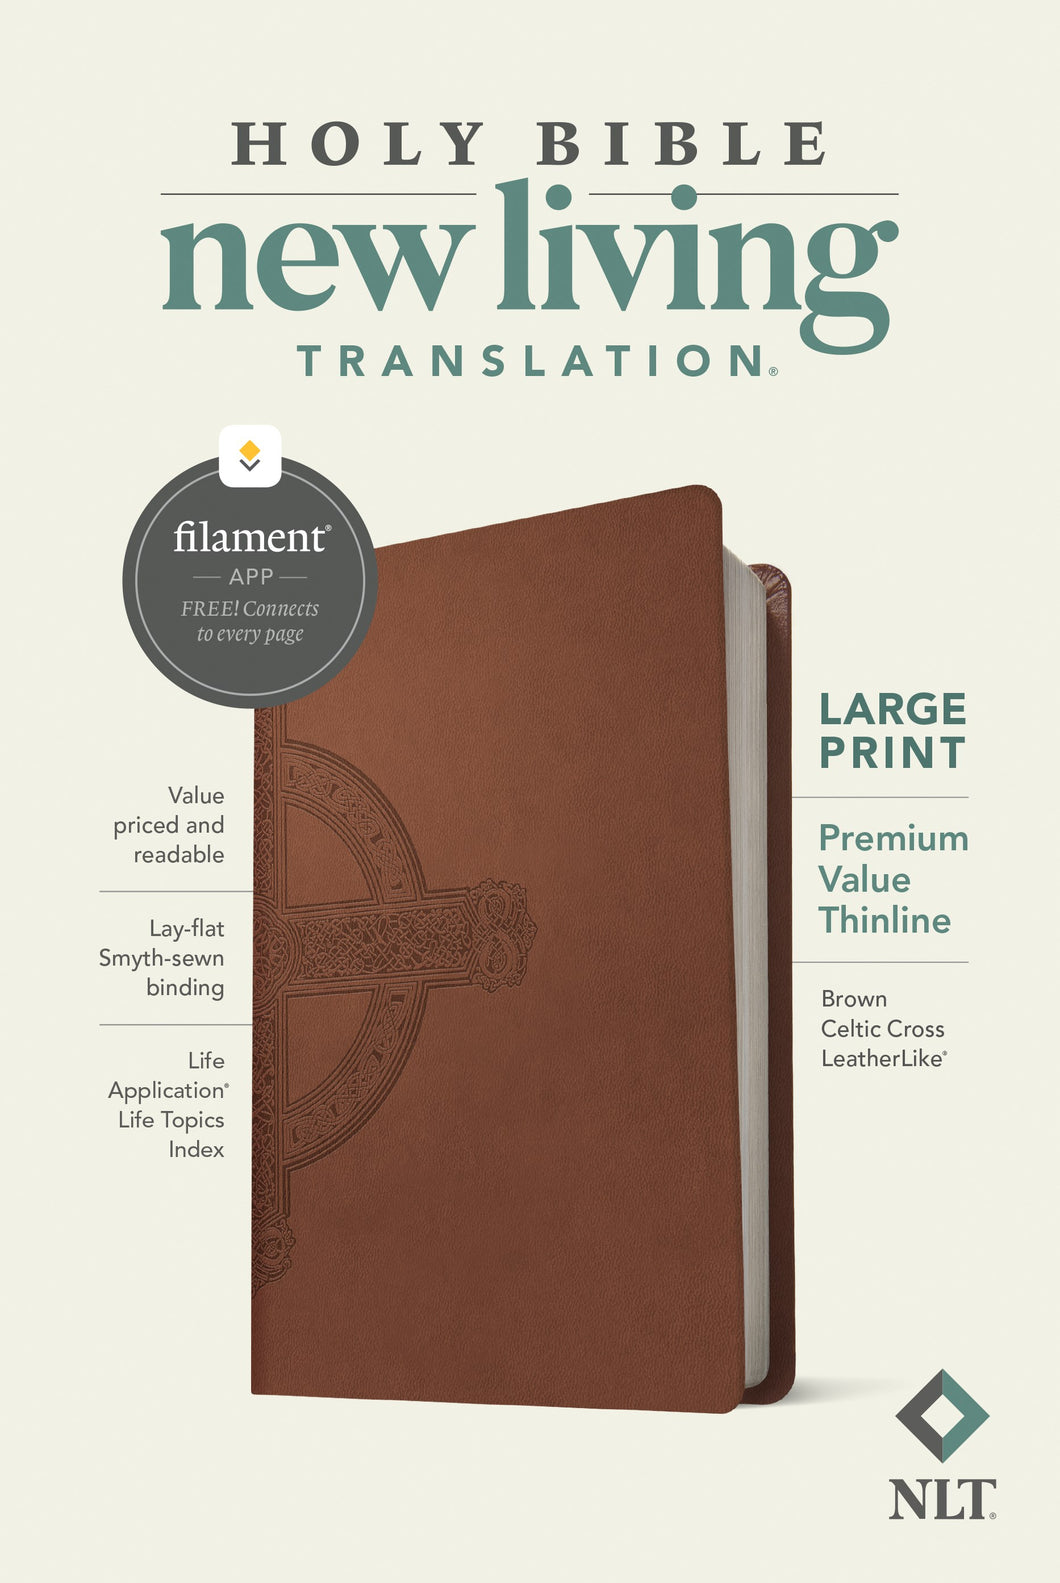 NLT Large Print Premium Value Thinline Bible/Filament Enabled-Brown Celtic Cross LeatherLike